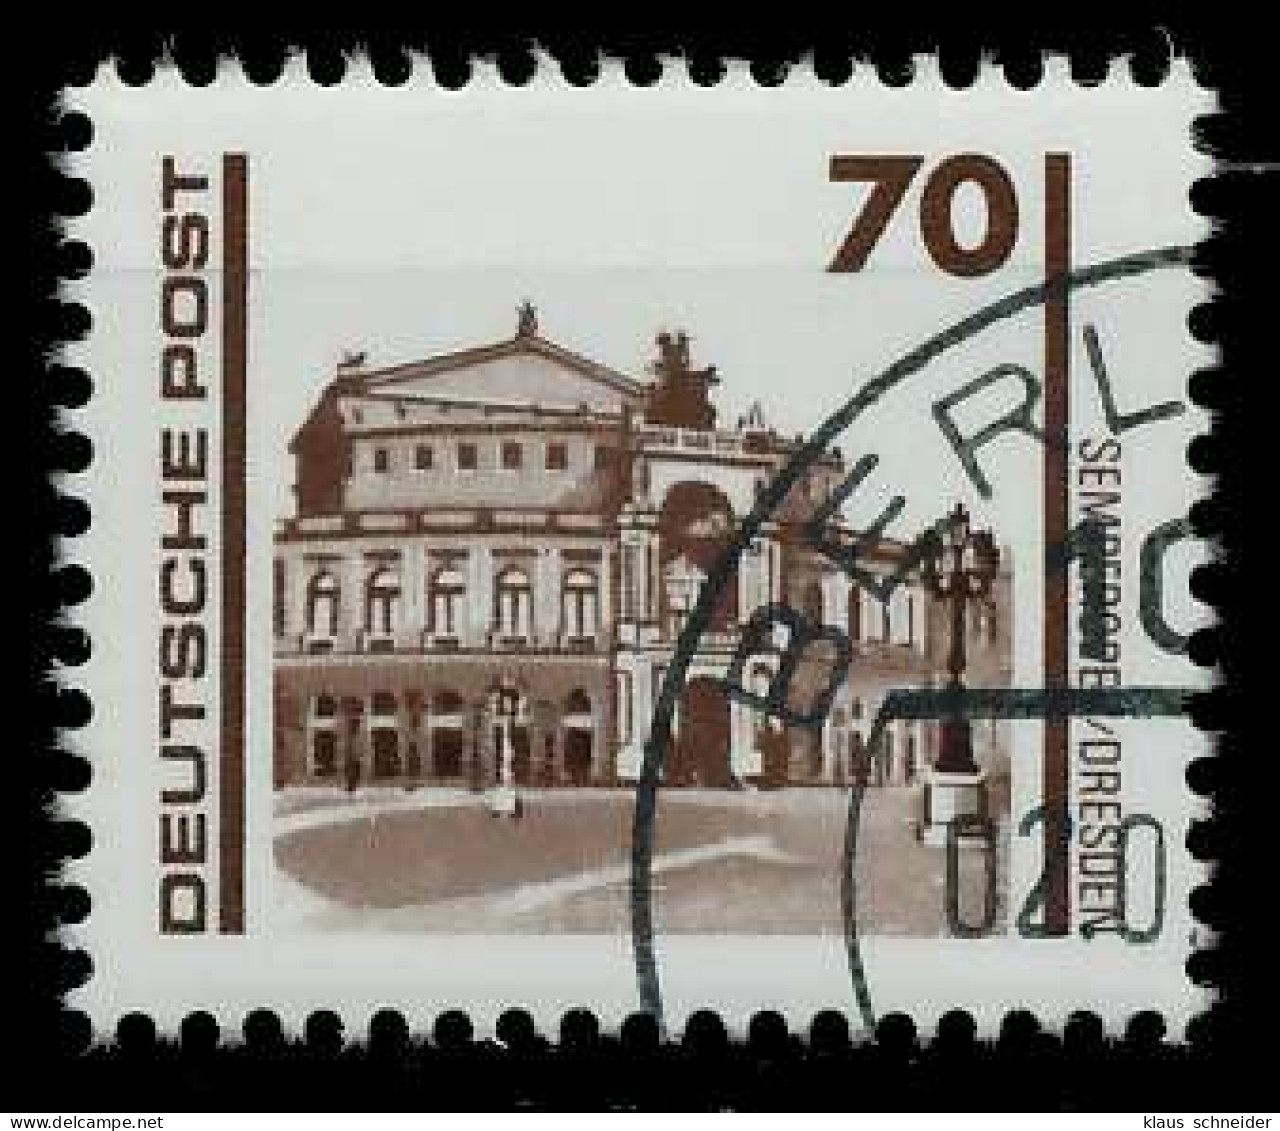 DDR DS BAUWERKE DENKMÄLER Nr 3348 Gestempelt X0262BE - Used Stamps